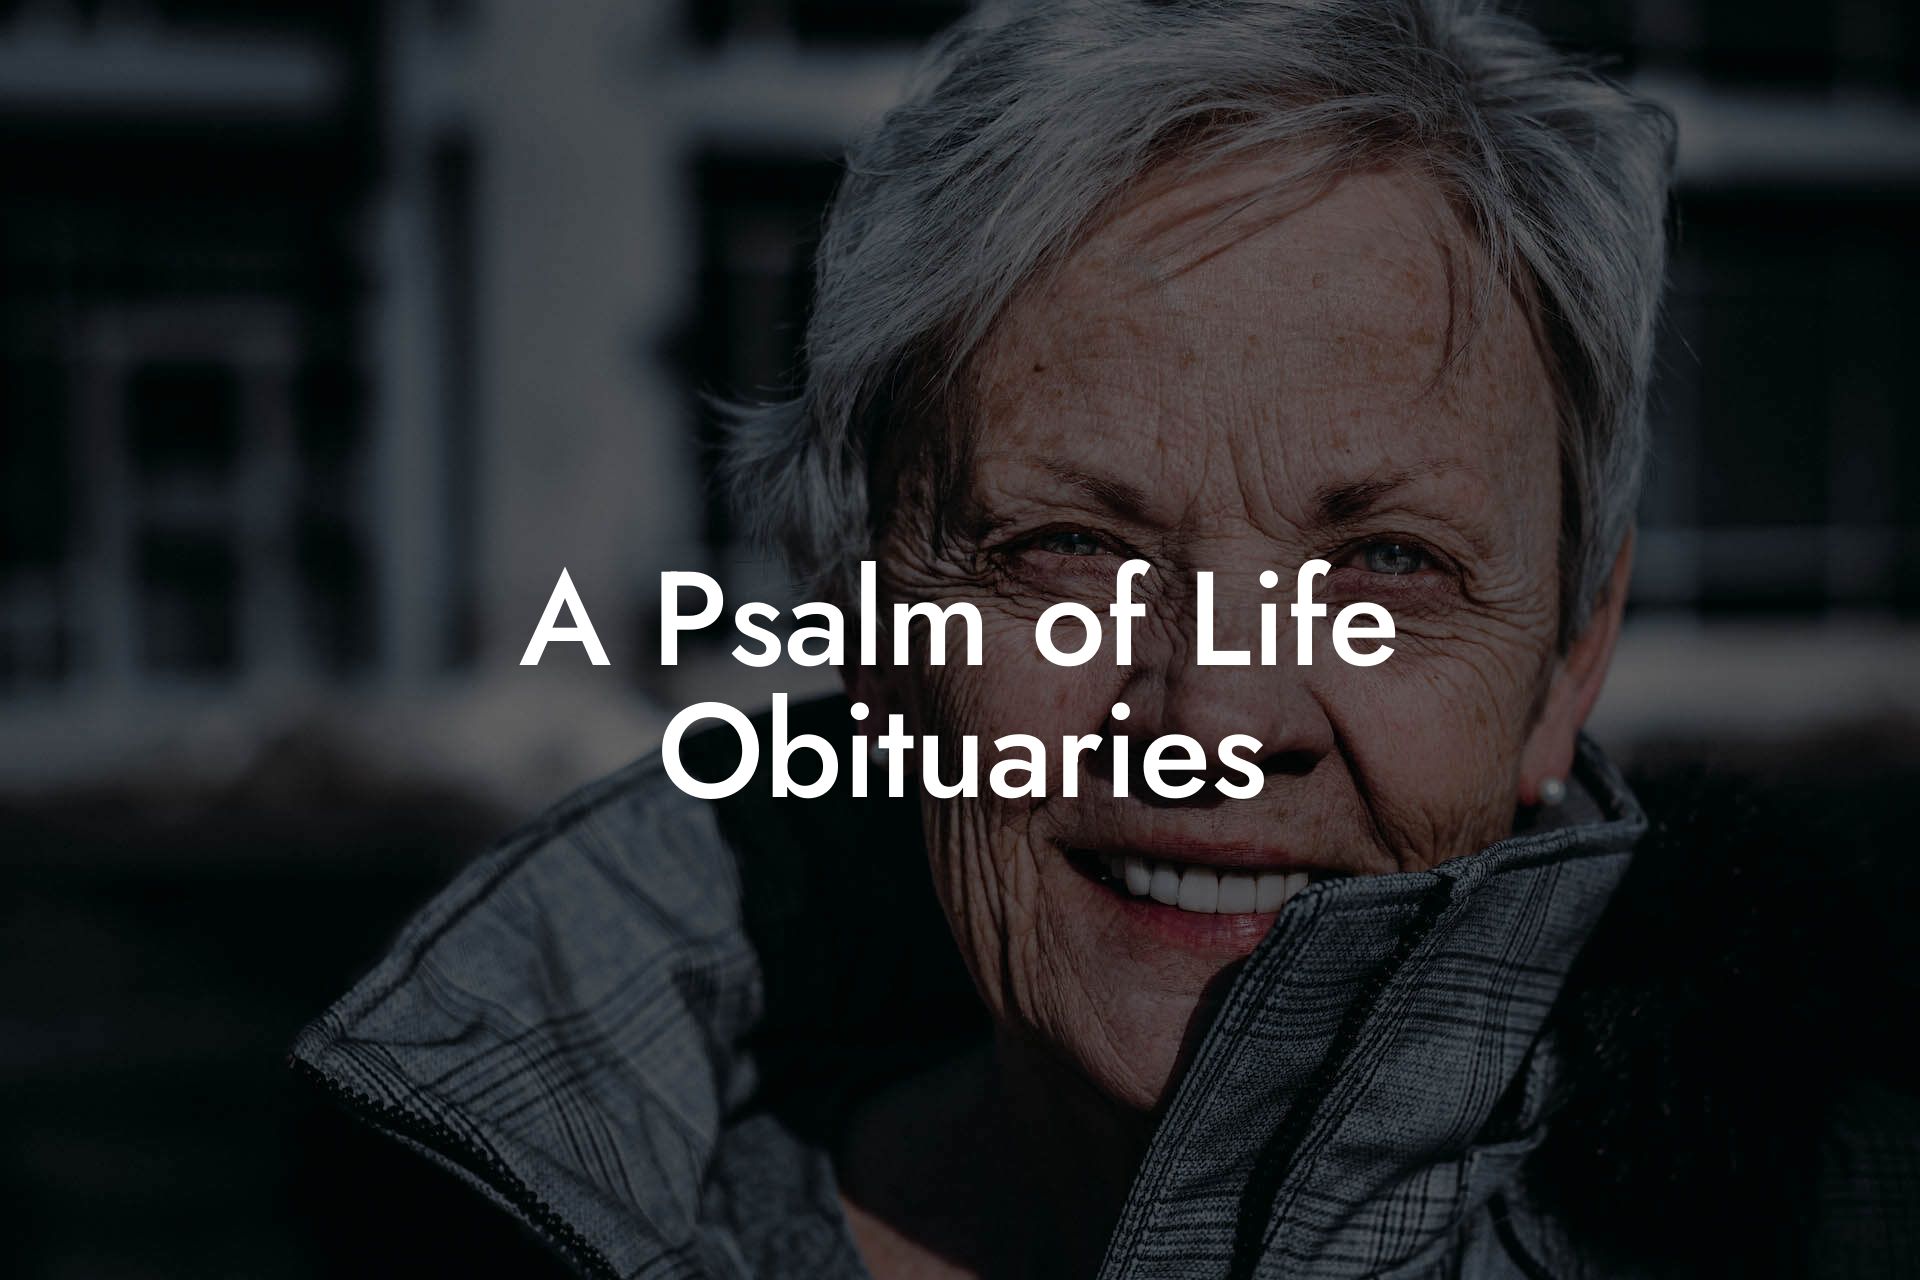 A Psalm of Life Obituaries